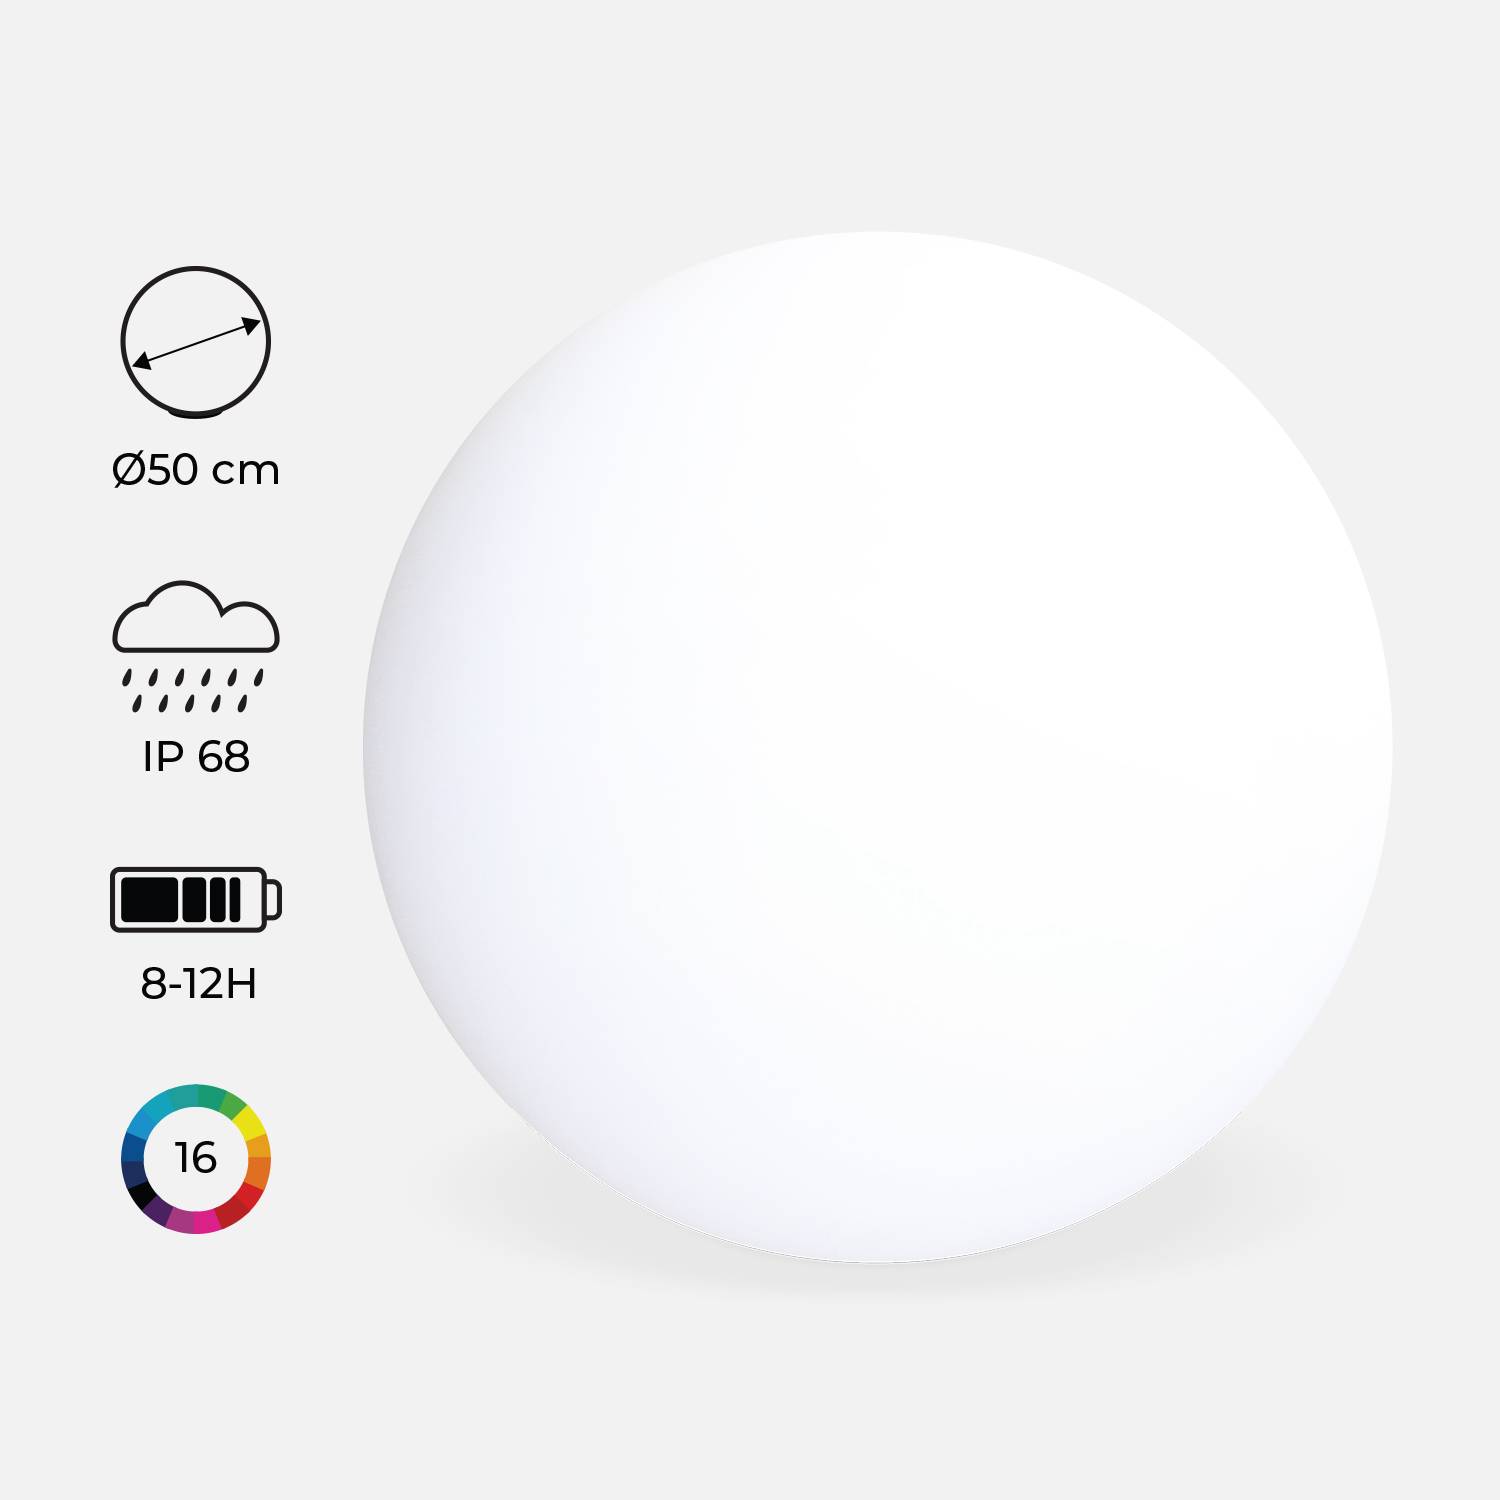 Lampada LED 50cm - Sfera decorativa luminosa,16 colori, Ø 50 cm, caricabatterie ad induzione senza fili. Photo2